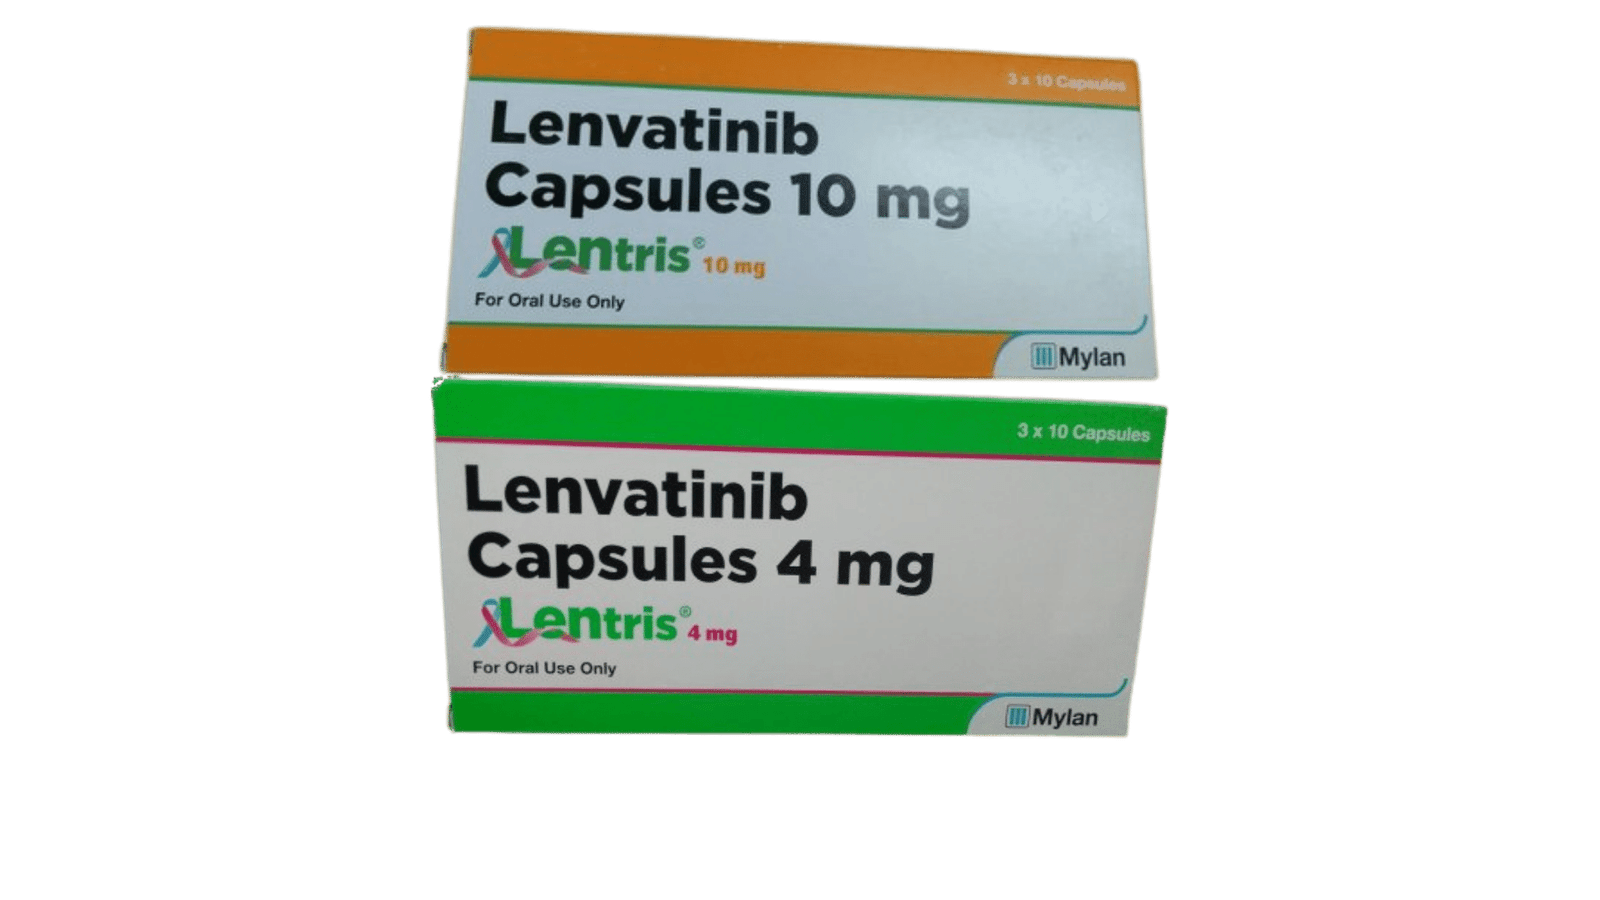 Buy Lentris Medicine Online in USA | Kitmeds